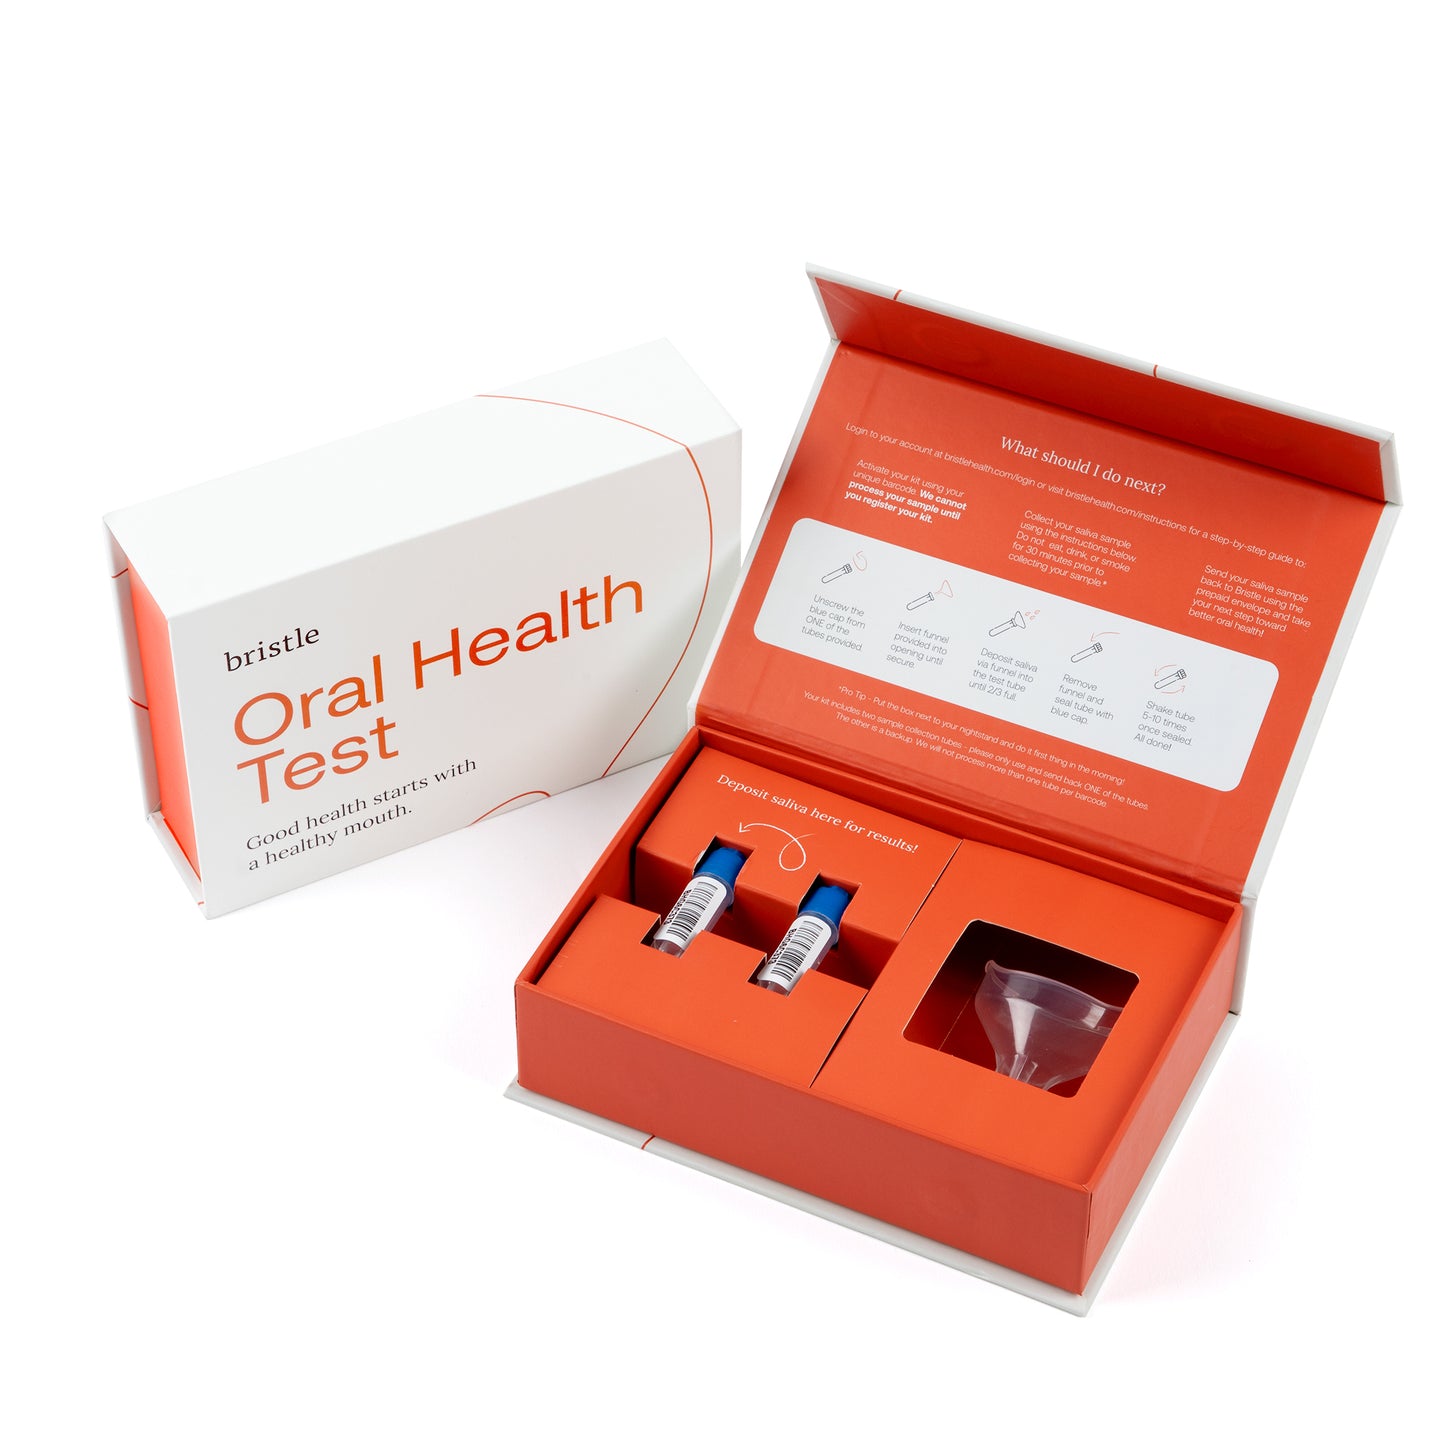 Bristle Oral Health Reset Program